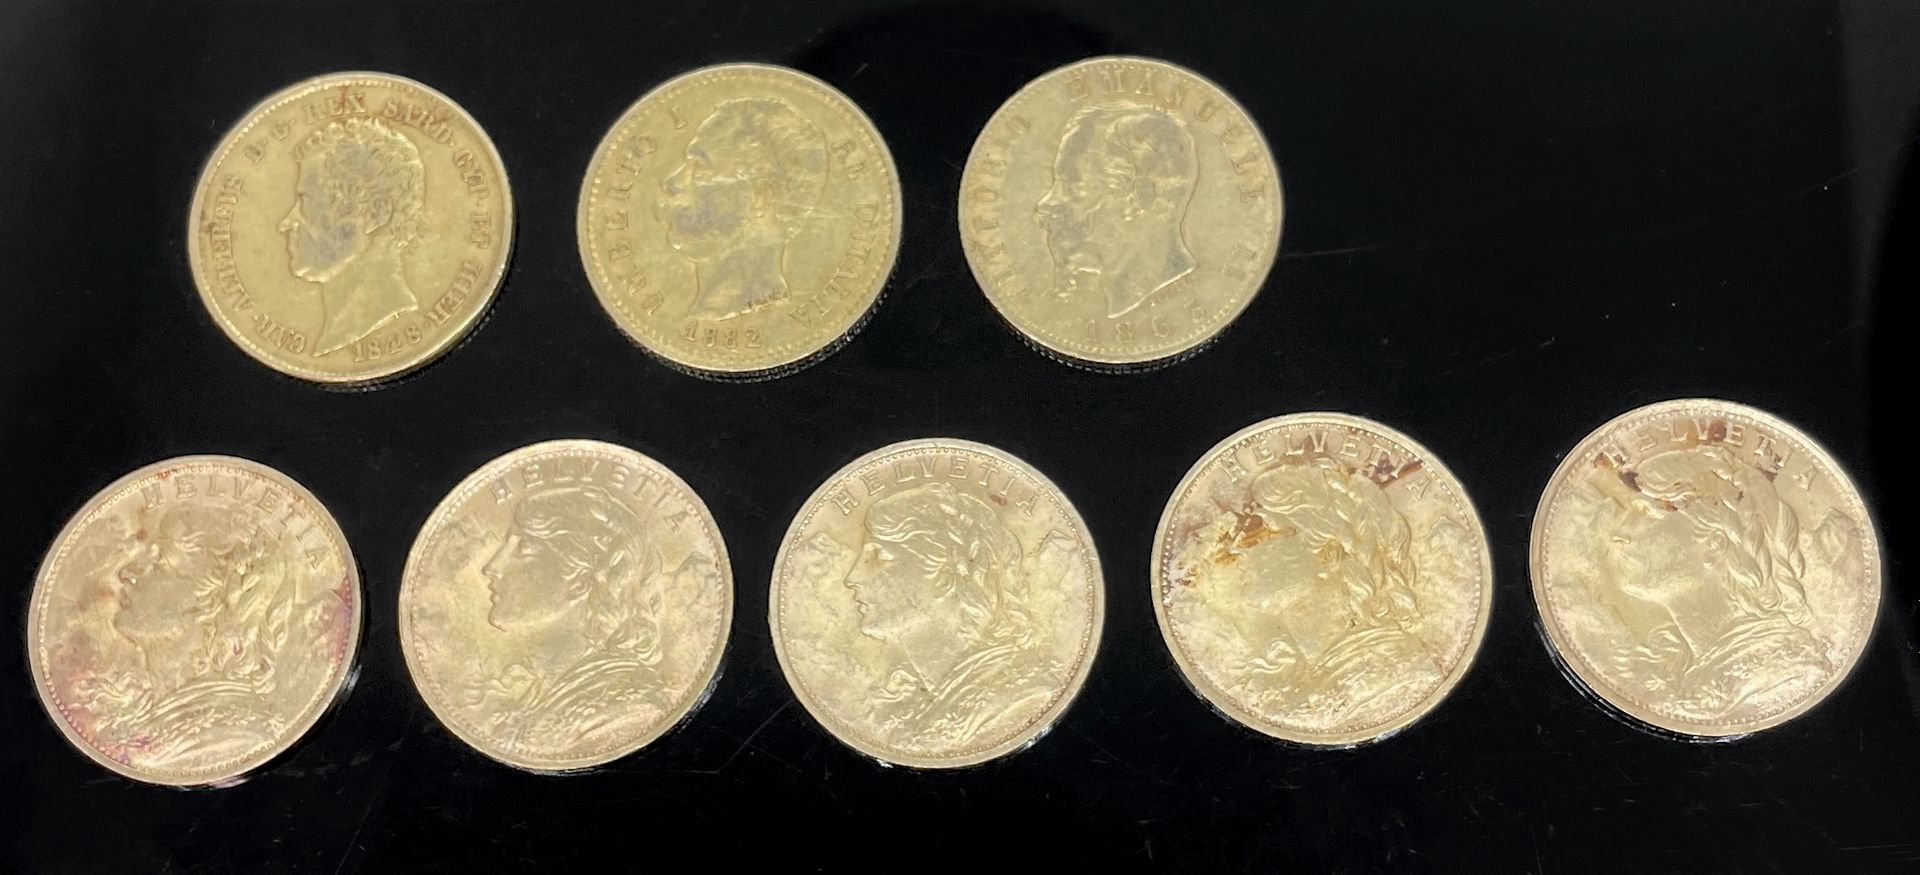 Null Otto monete d'oro: 5 pezzi 20 fr. Svizzera e 3 pezzi 20 lire Italia